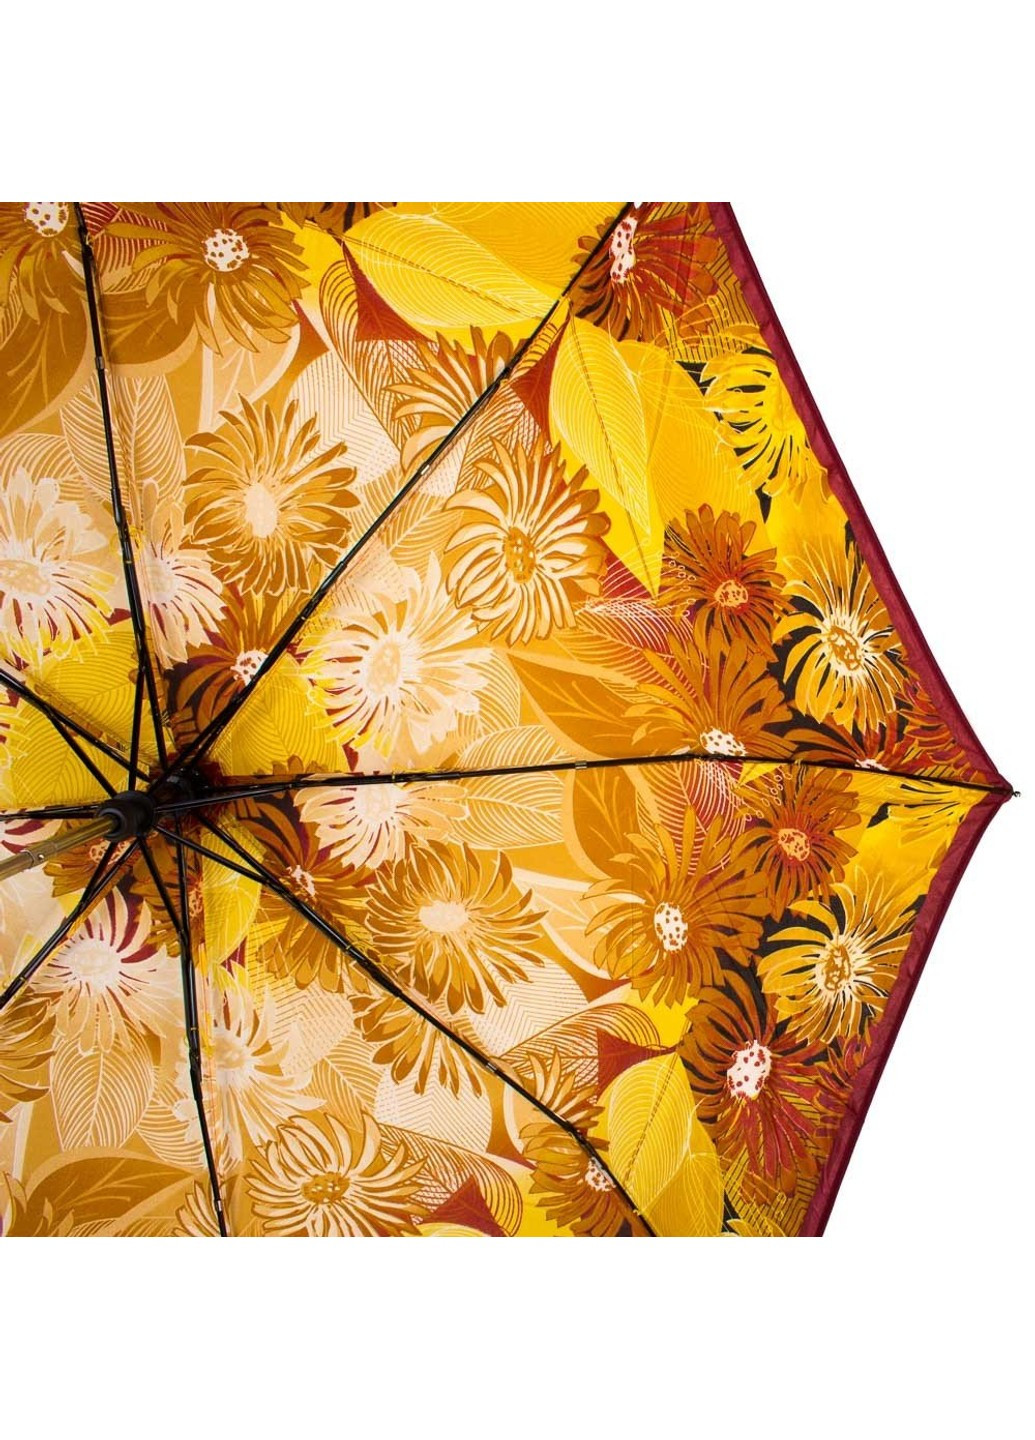 Полуавтоматический женский зонтик желтый дизайнерский Airton (262976735)